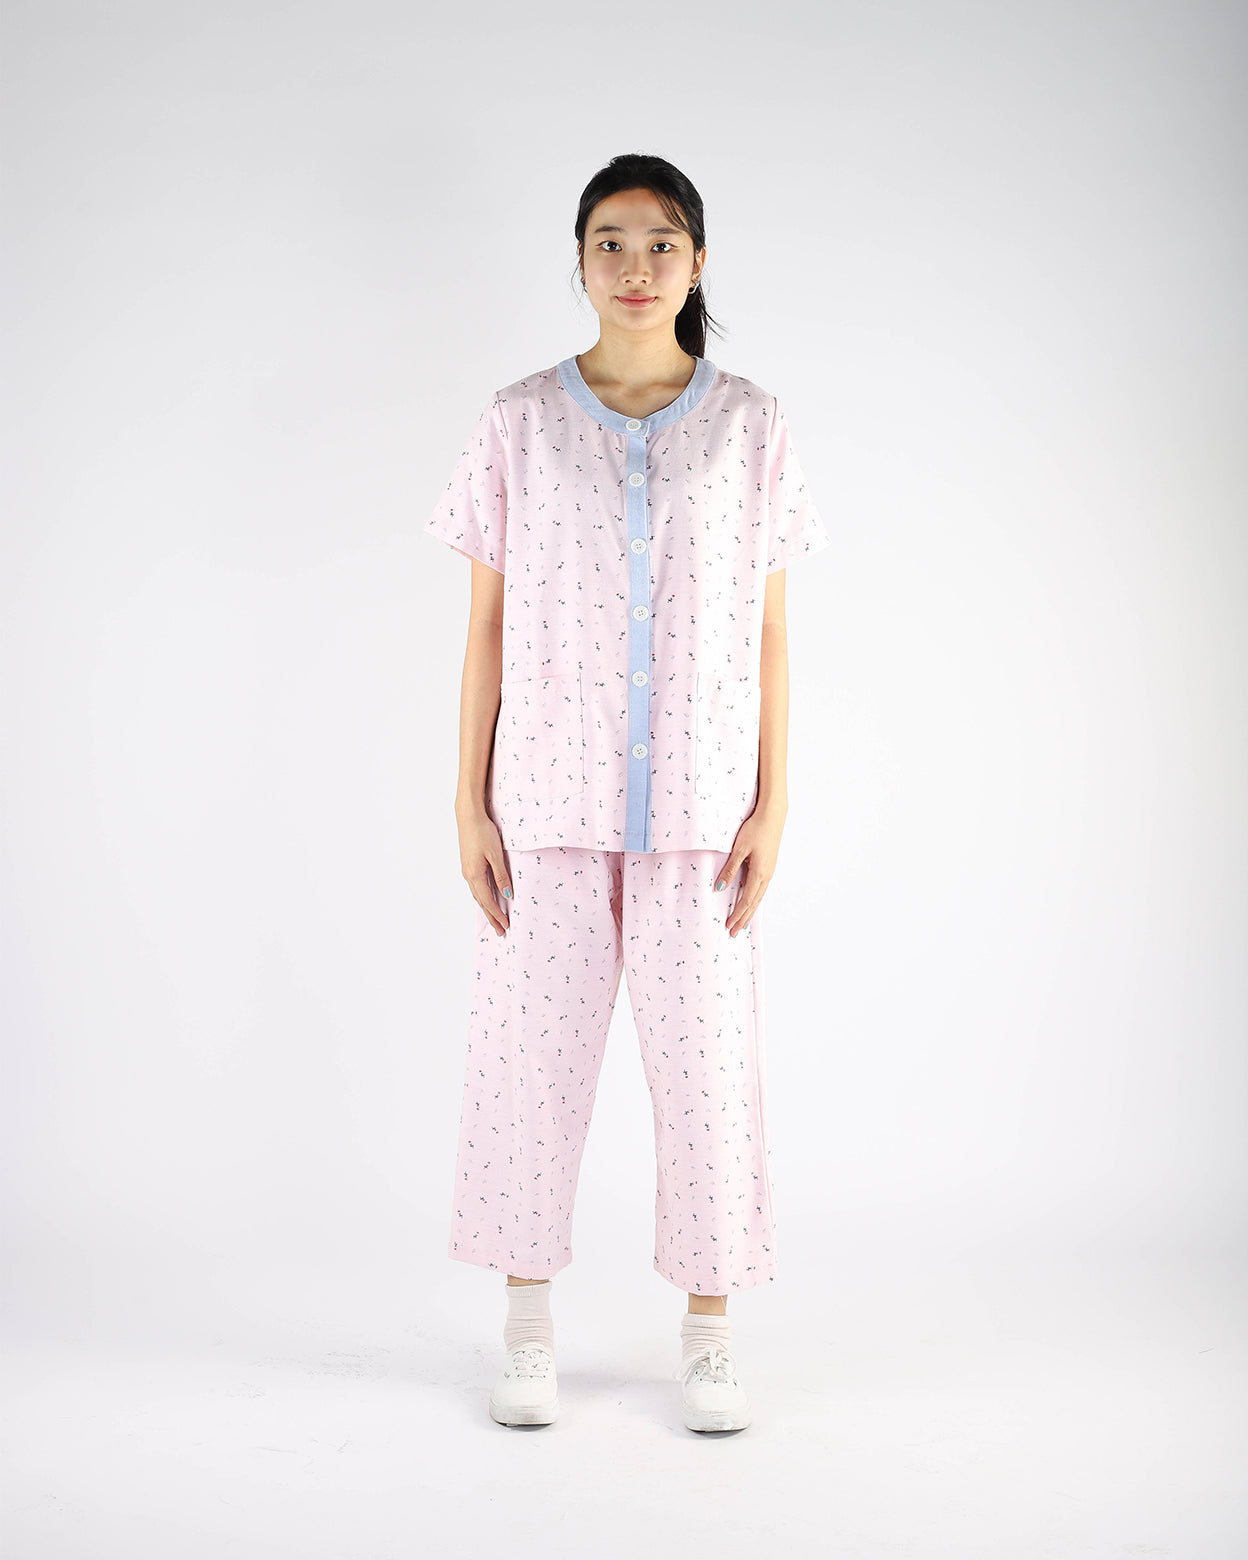 Pink Inpatient Pyjama Pants with Floral Print